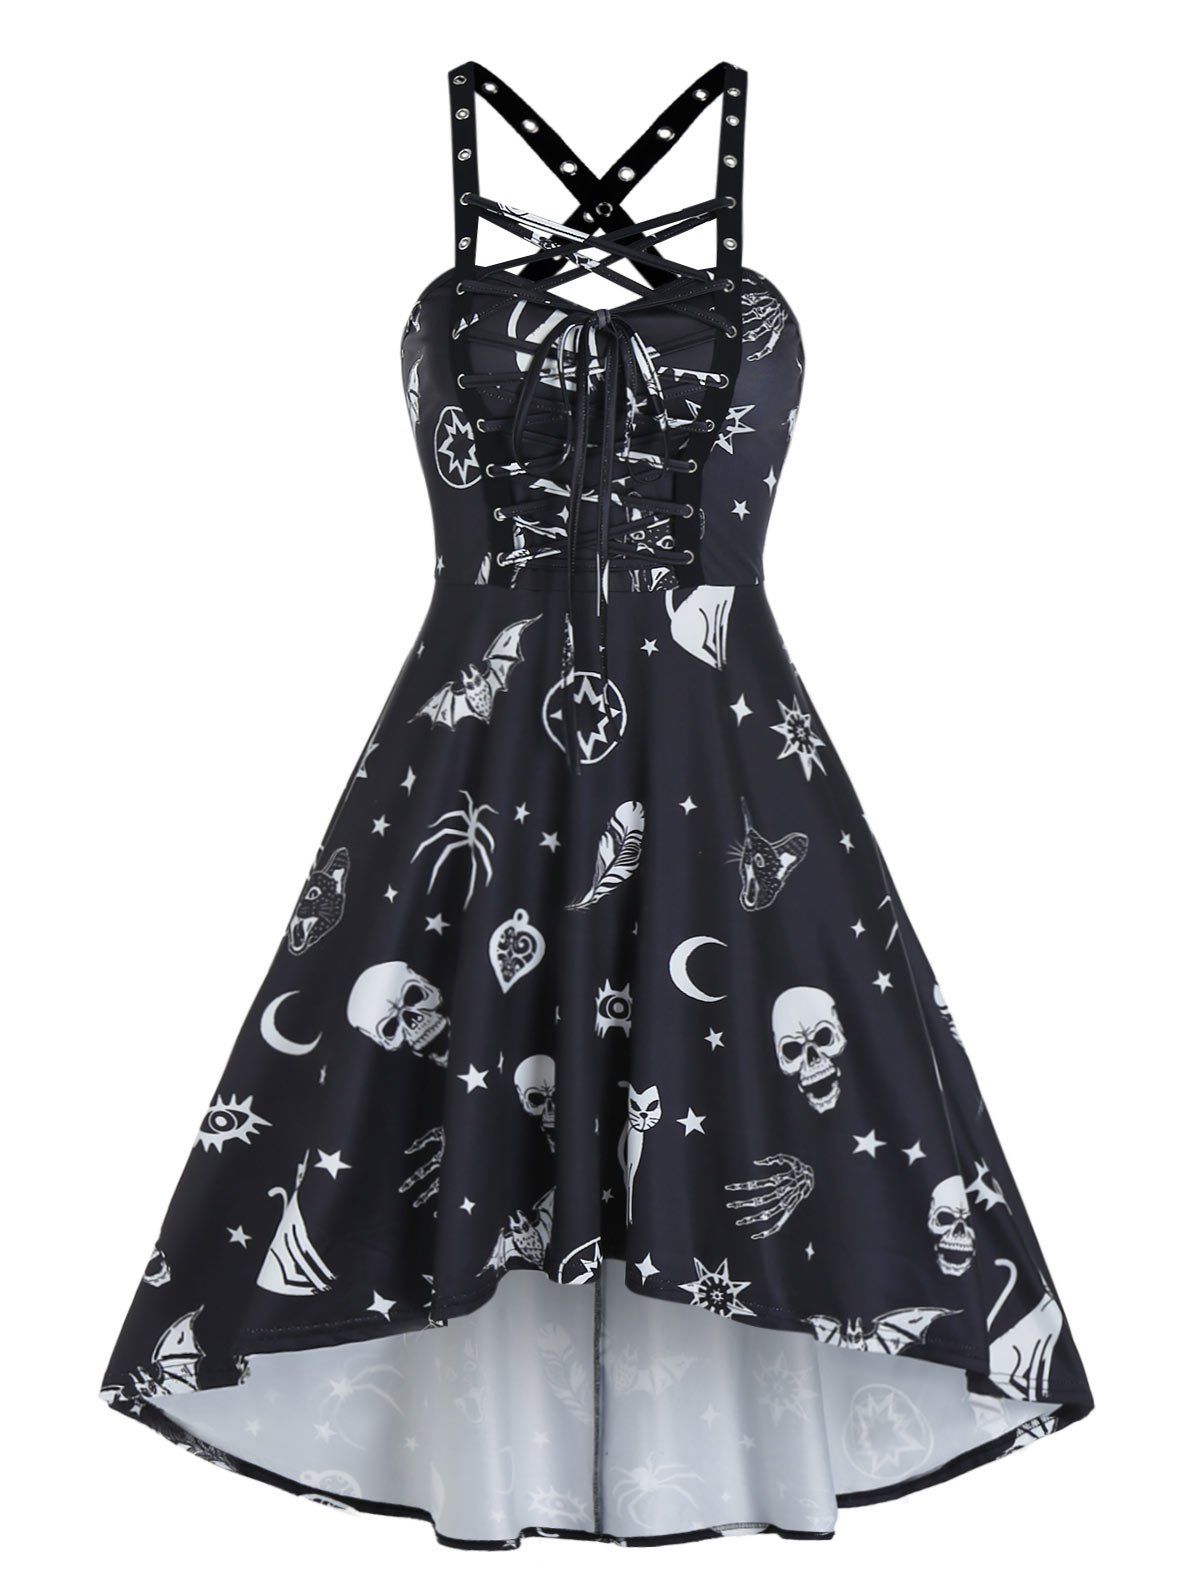 Summer Gothic Skull Animal Print Cross Back Cami High Low Dress - BLACK L